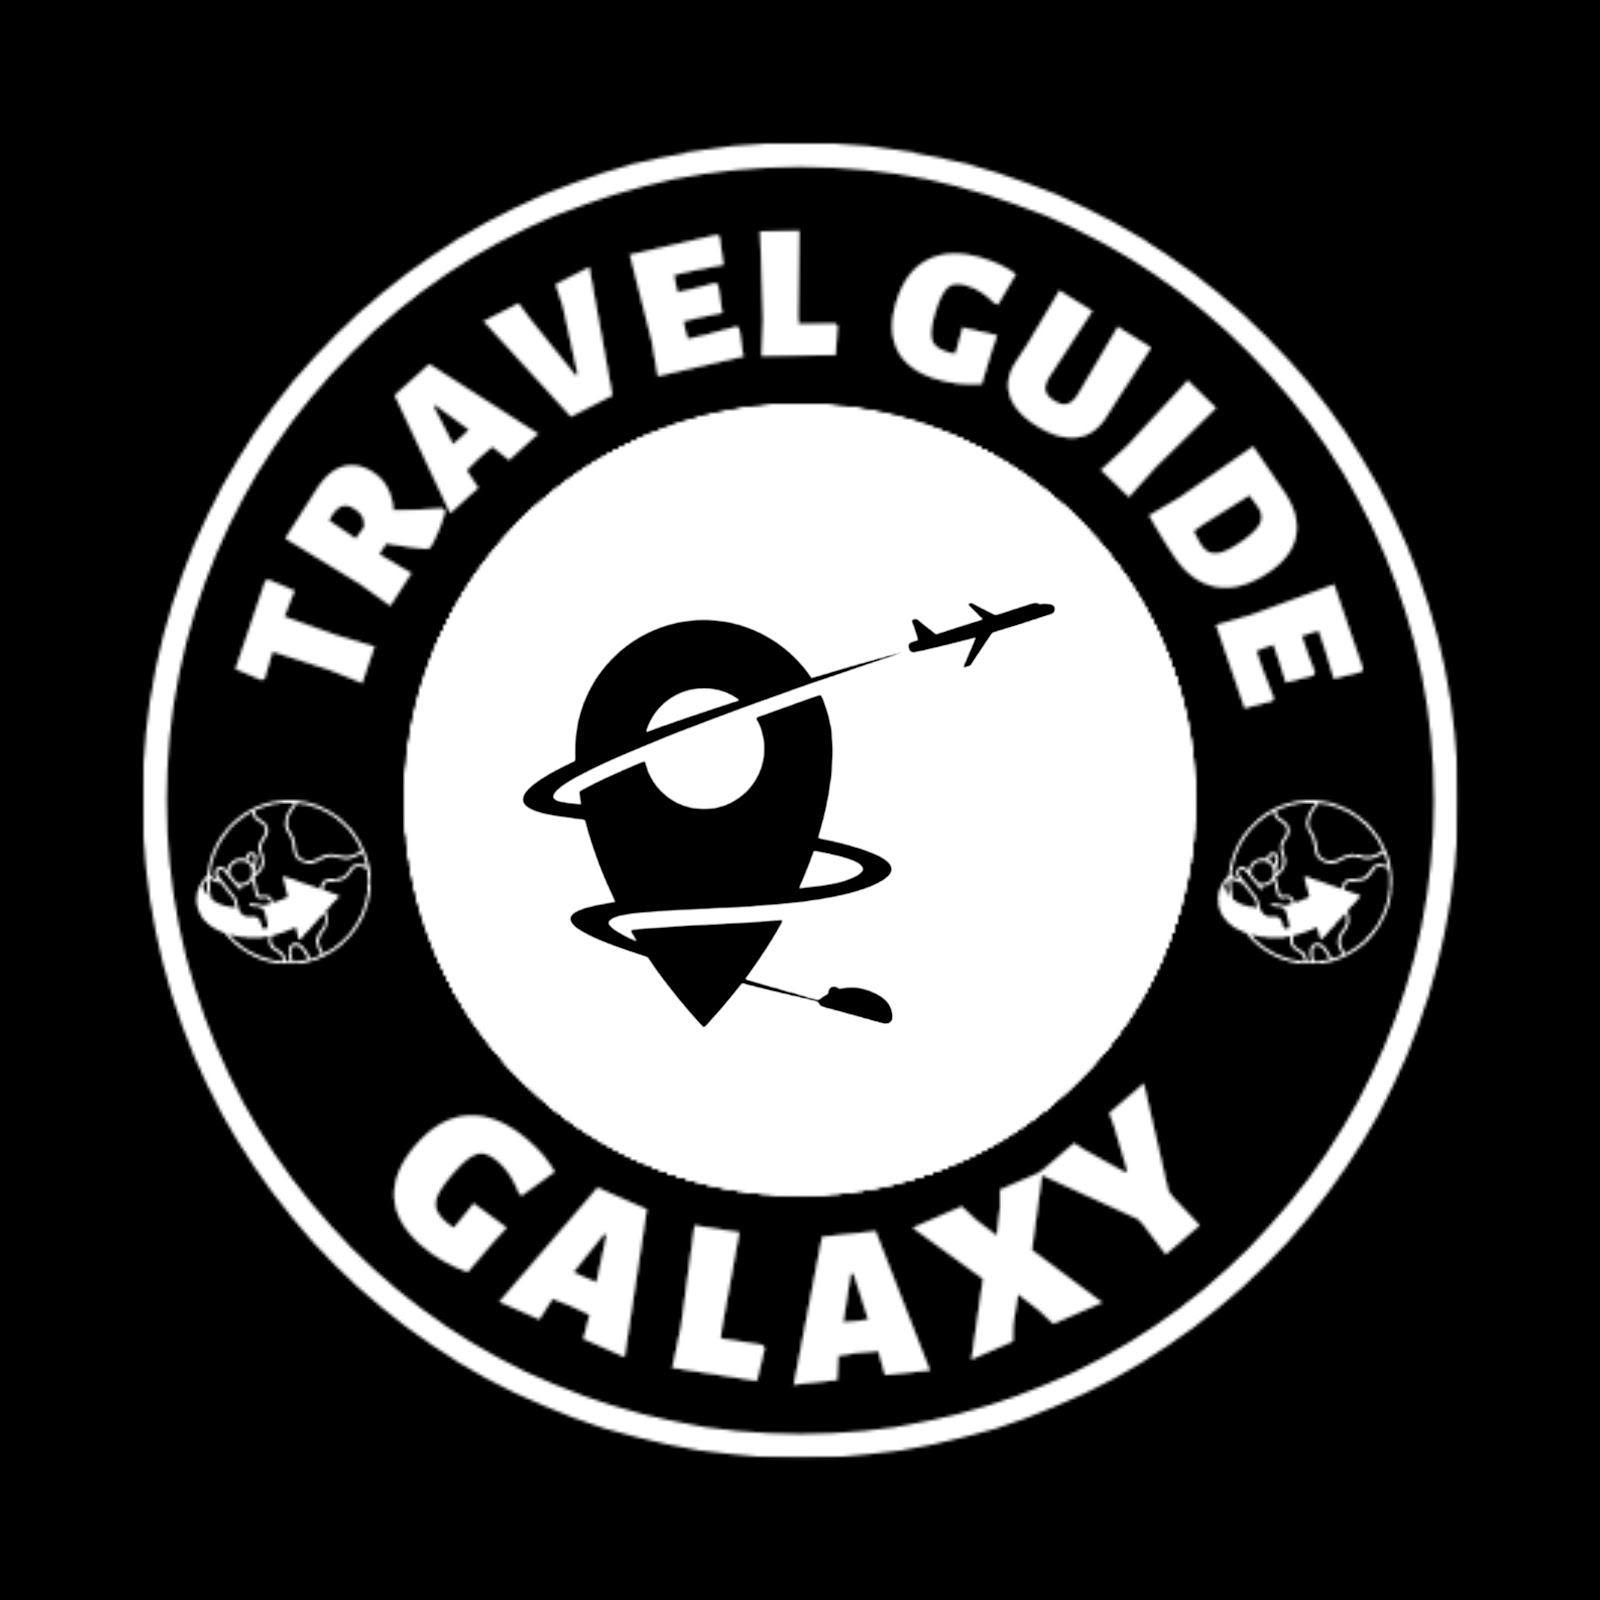 Travel Guide Galaxy